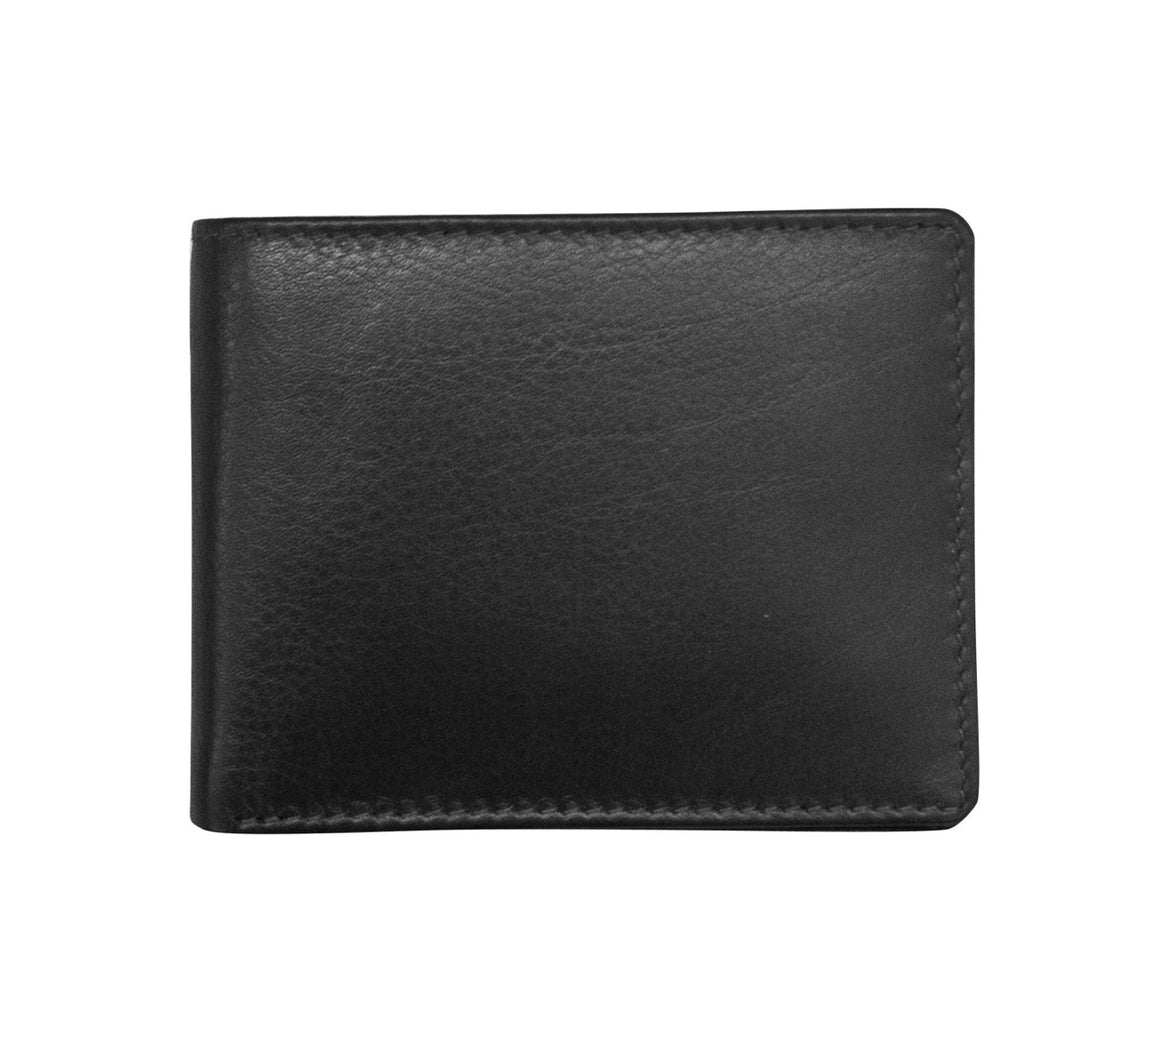 ili New York | Leather Bifold Men's Wallets